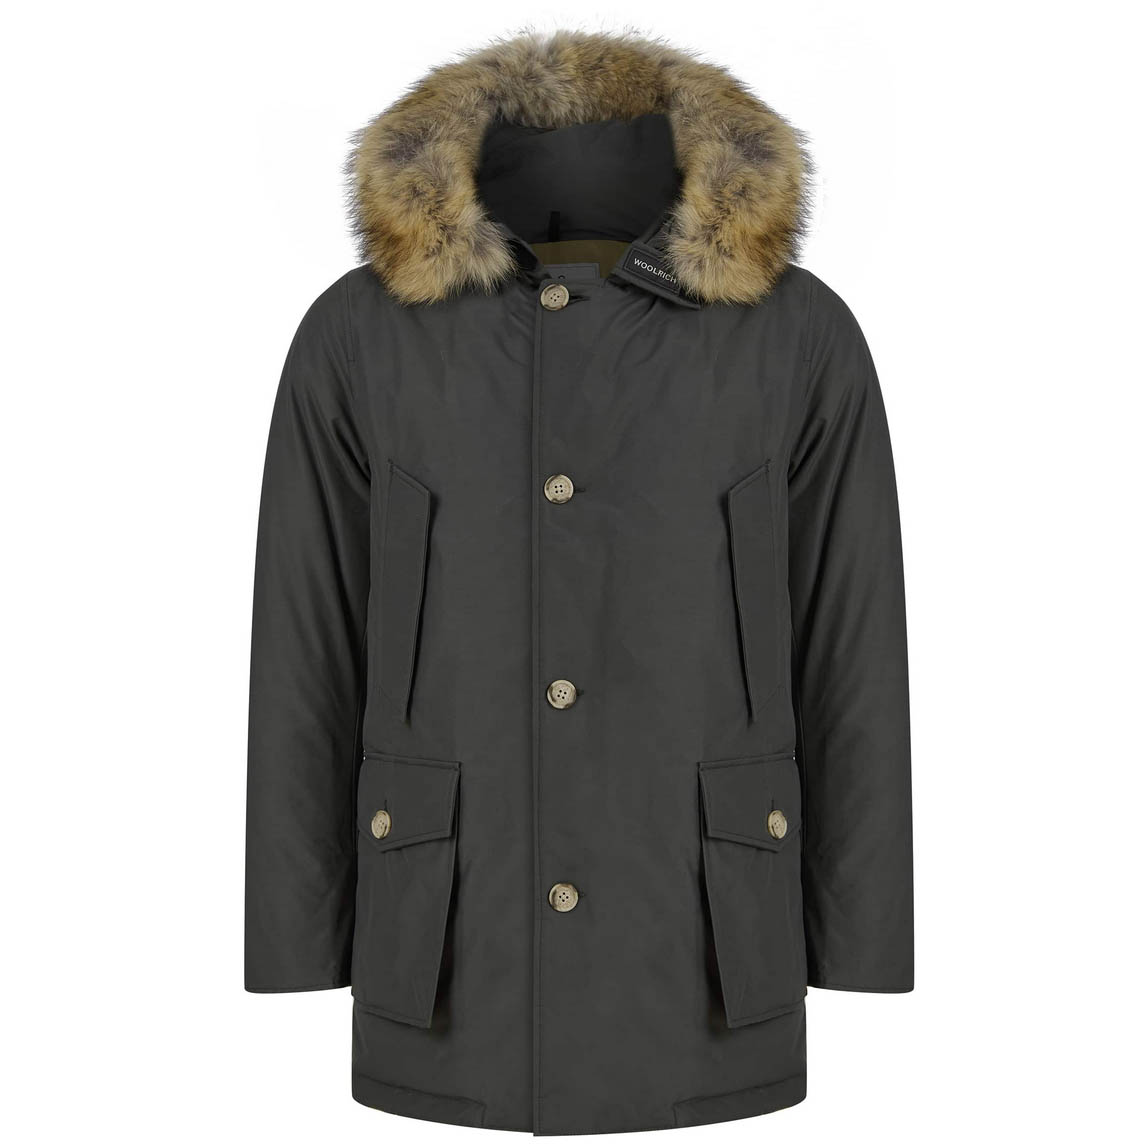 R hoogtepunt Ongelijkheid Woolrich Arctic Detachable Fur Down Filling Warm Winter Parka Coat Grey  Shadow | eBay